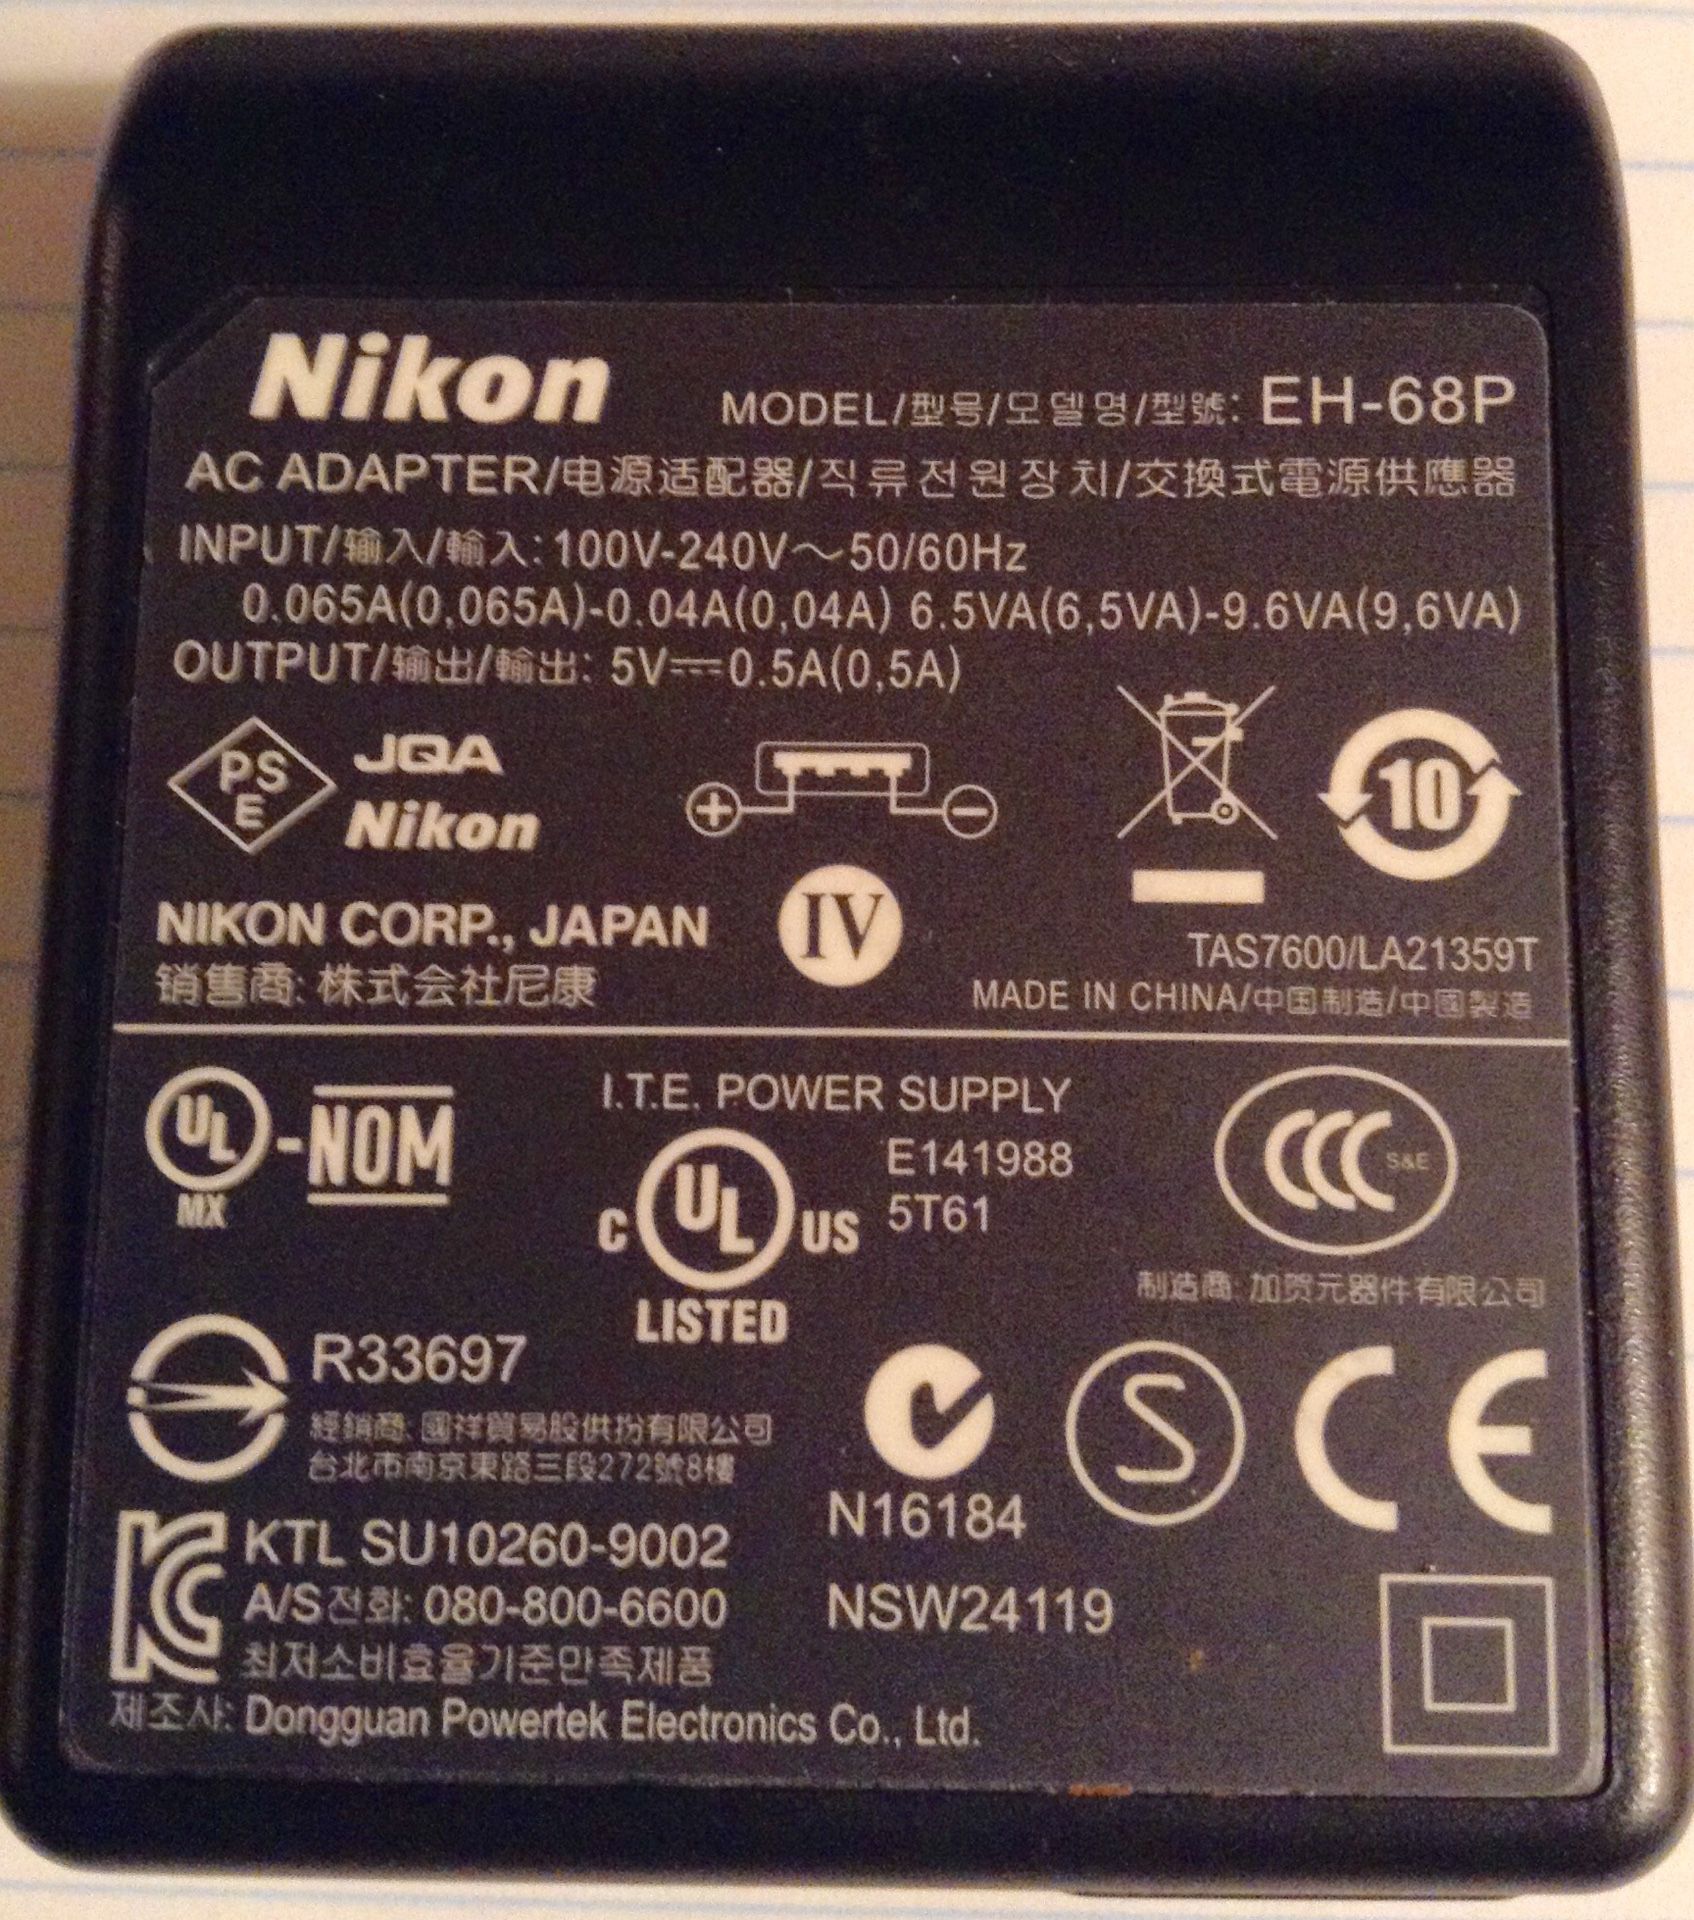 Nikon Battery Charger